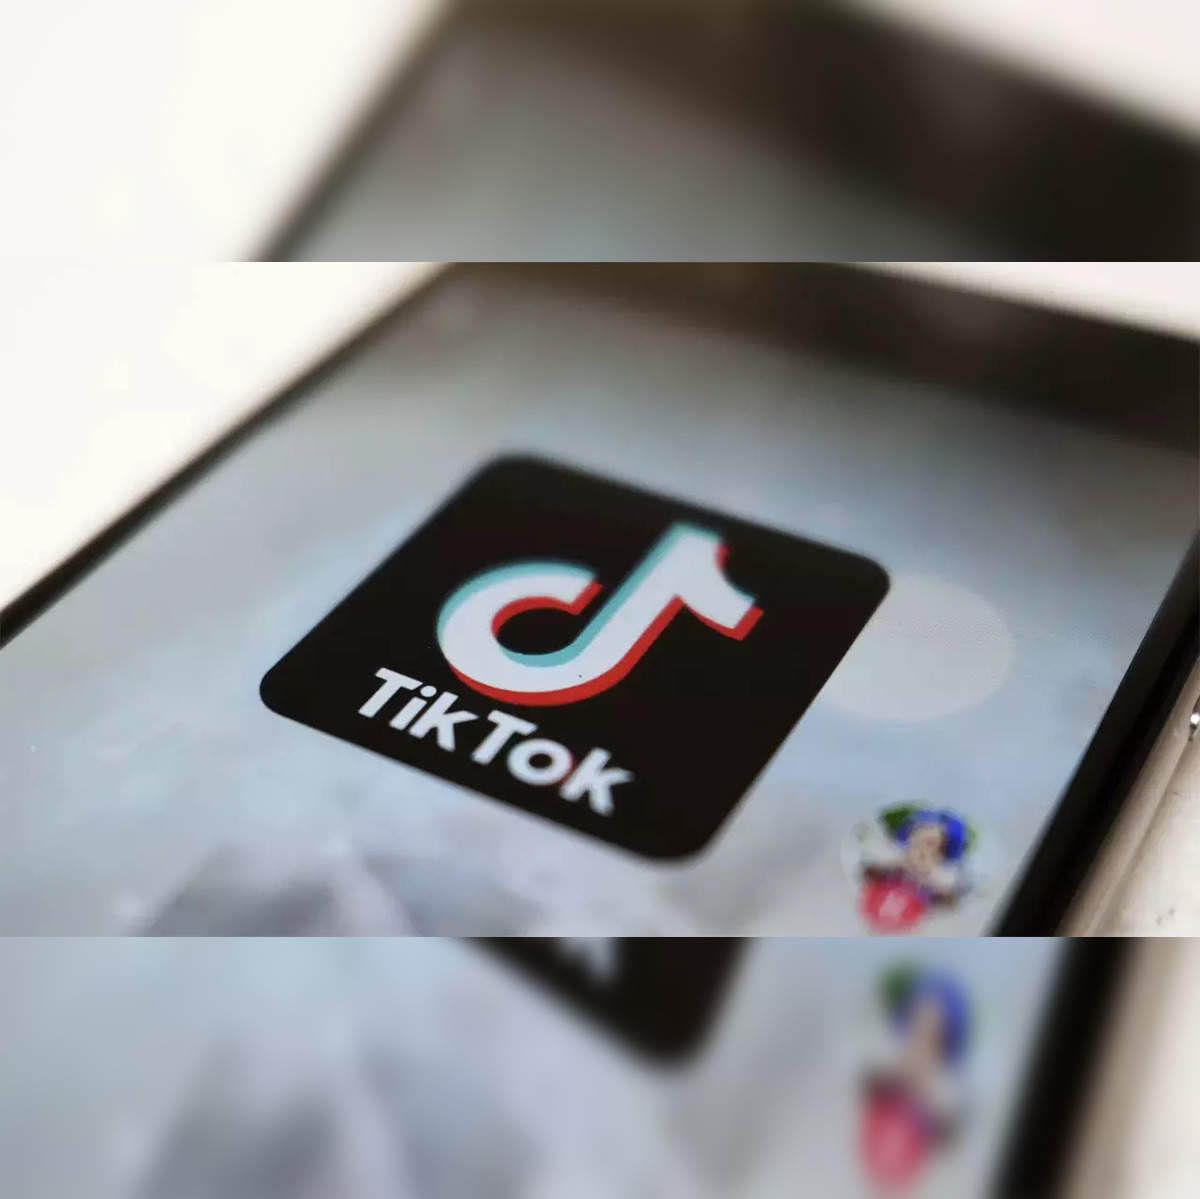 Indonesia bans e-commerce sales on social media platforms like TikTok, Indonesia